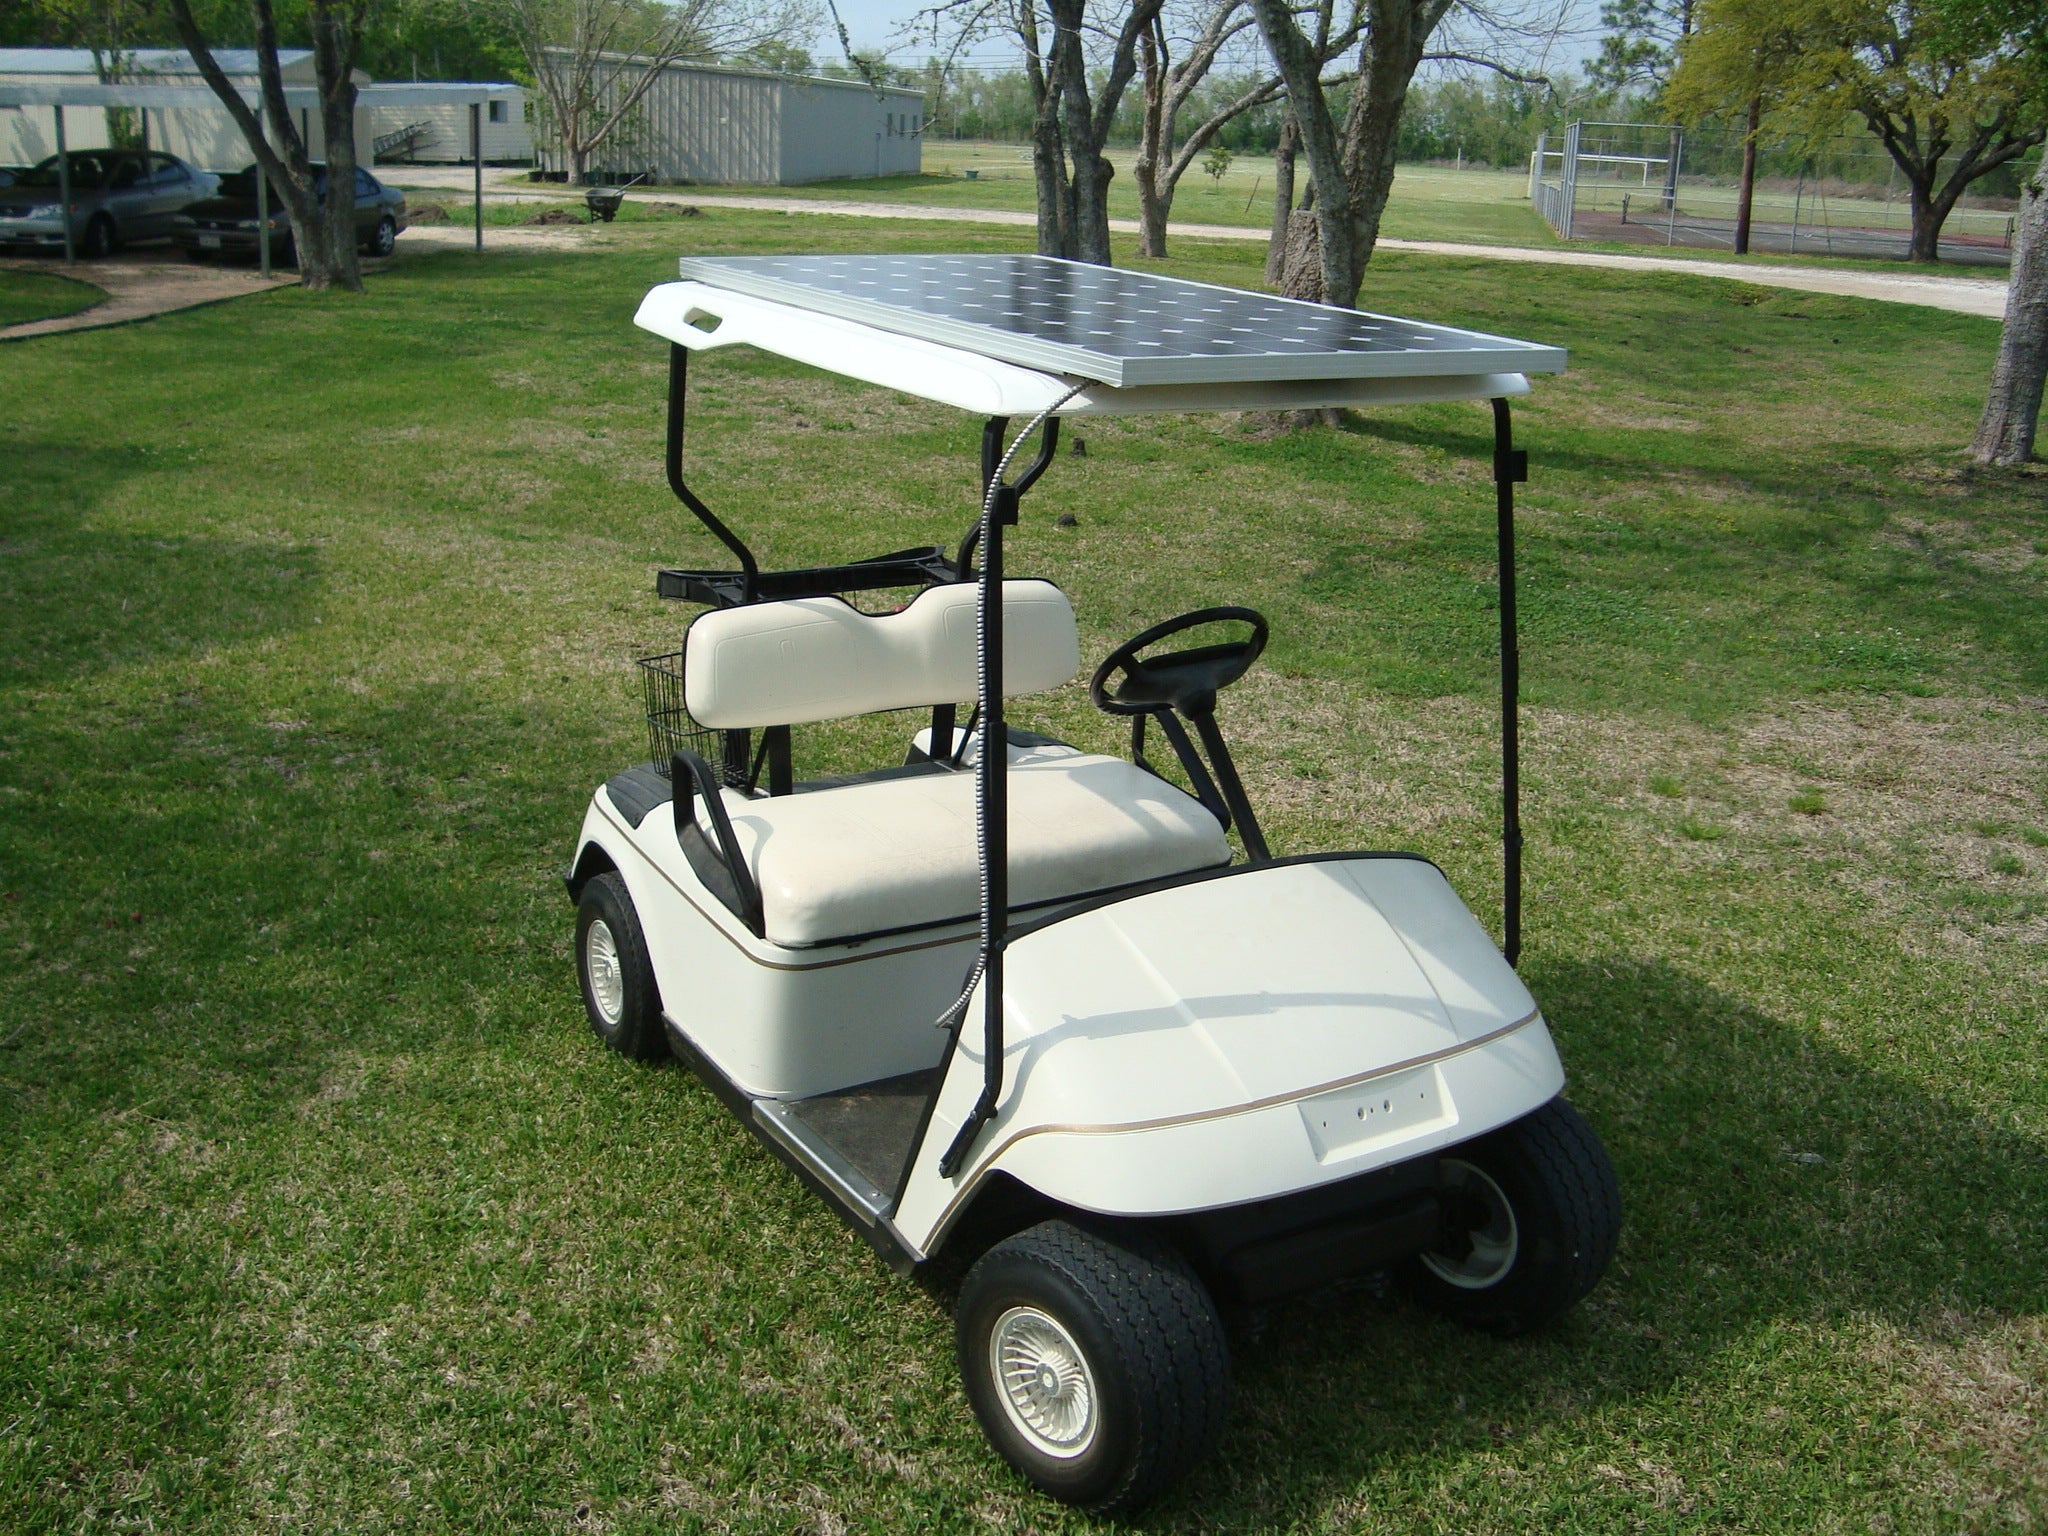 How to Build a Solar Powered Golf Cart